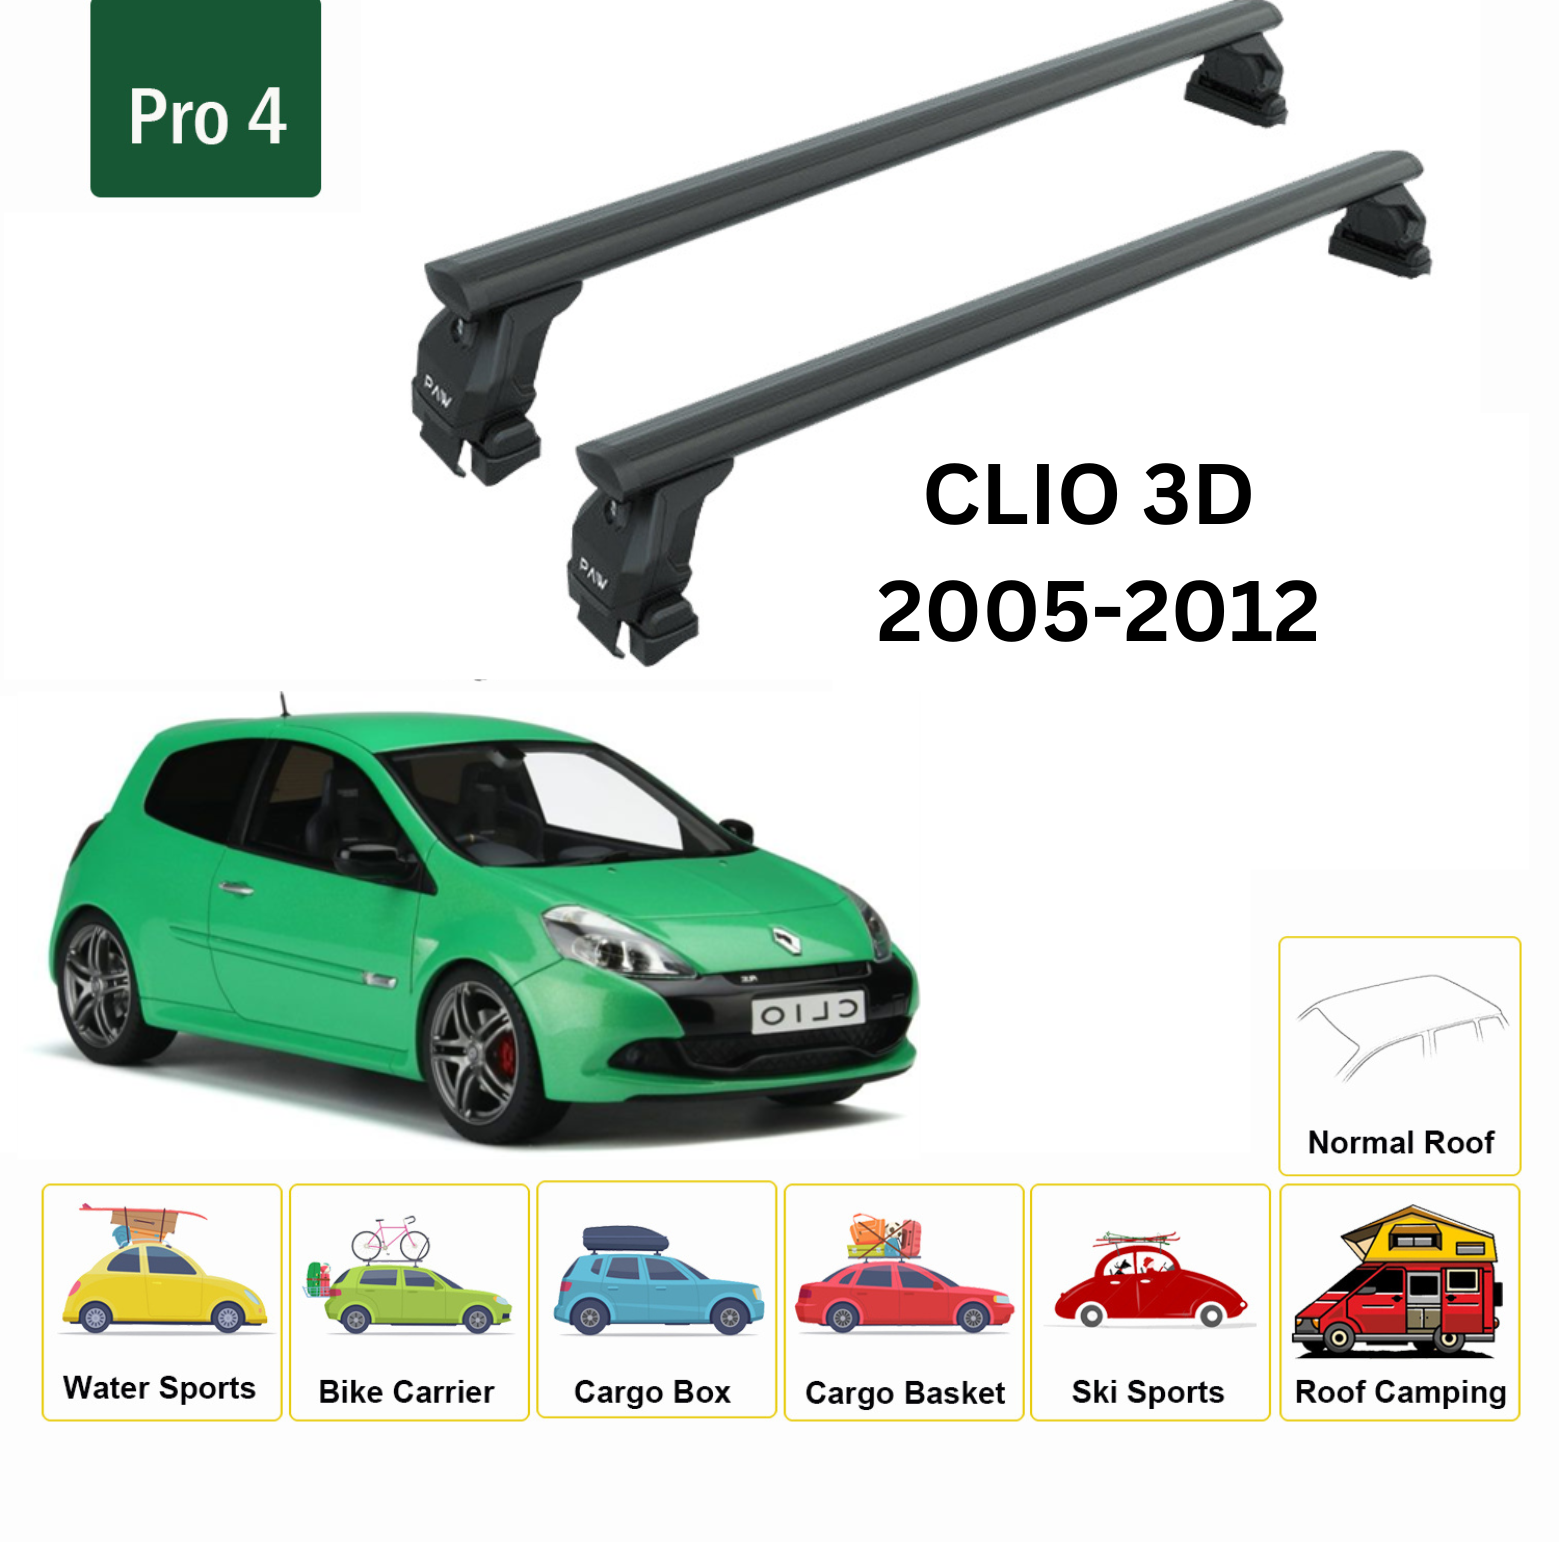 For Renault Clio 3D 2005-2012 Roof Rack System, Aluminium Cross Bar, Metal Bracket, Normal Roof, Black - 0